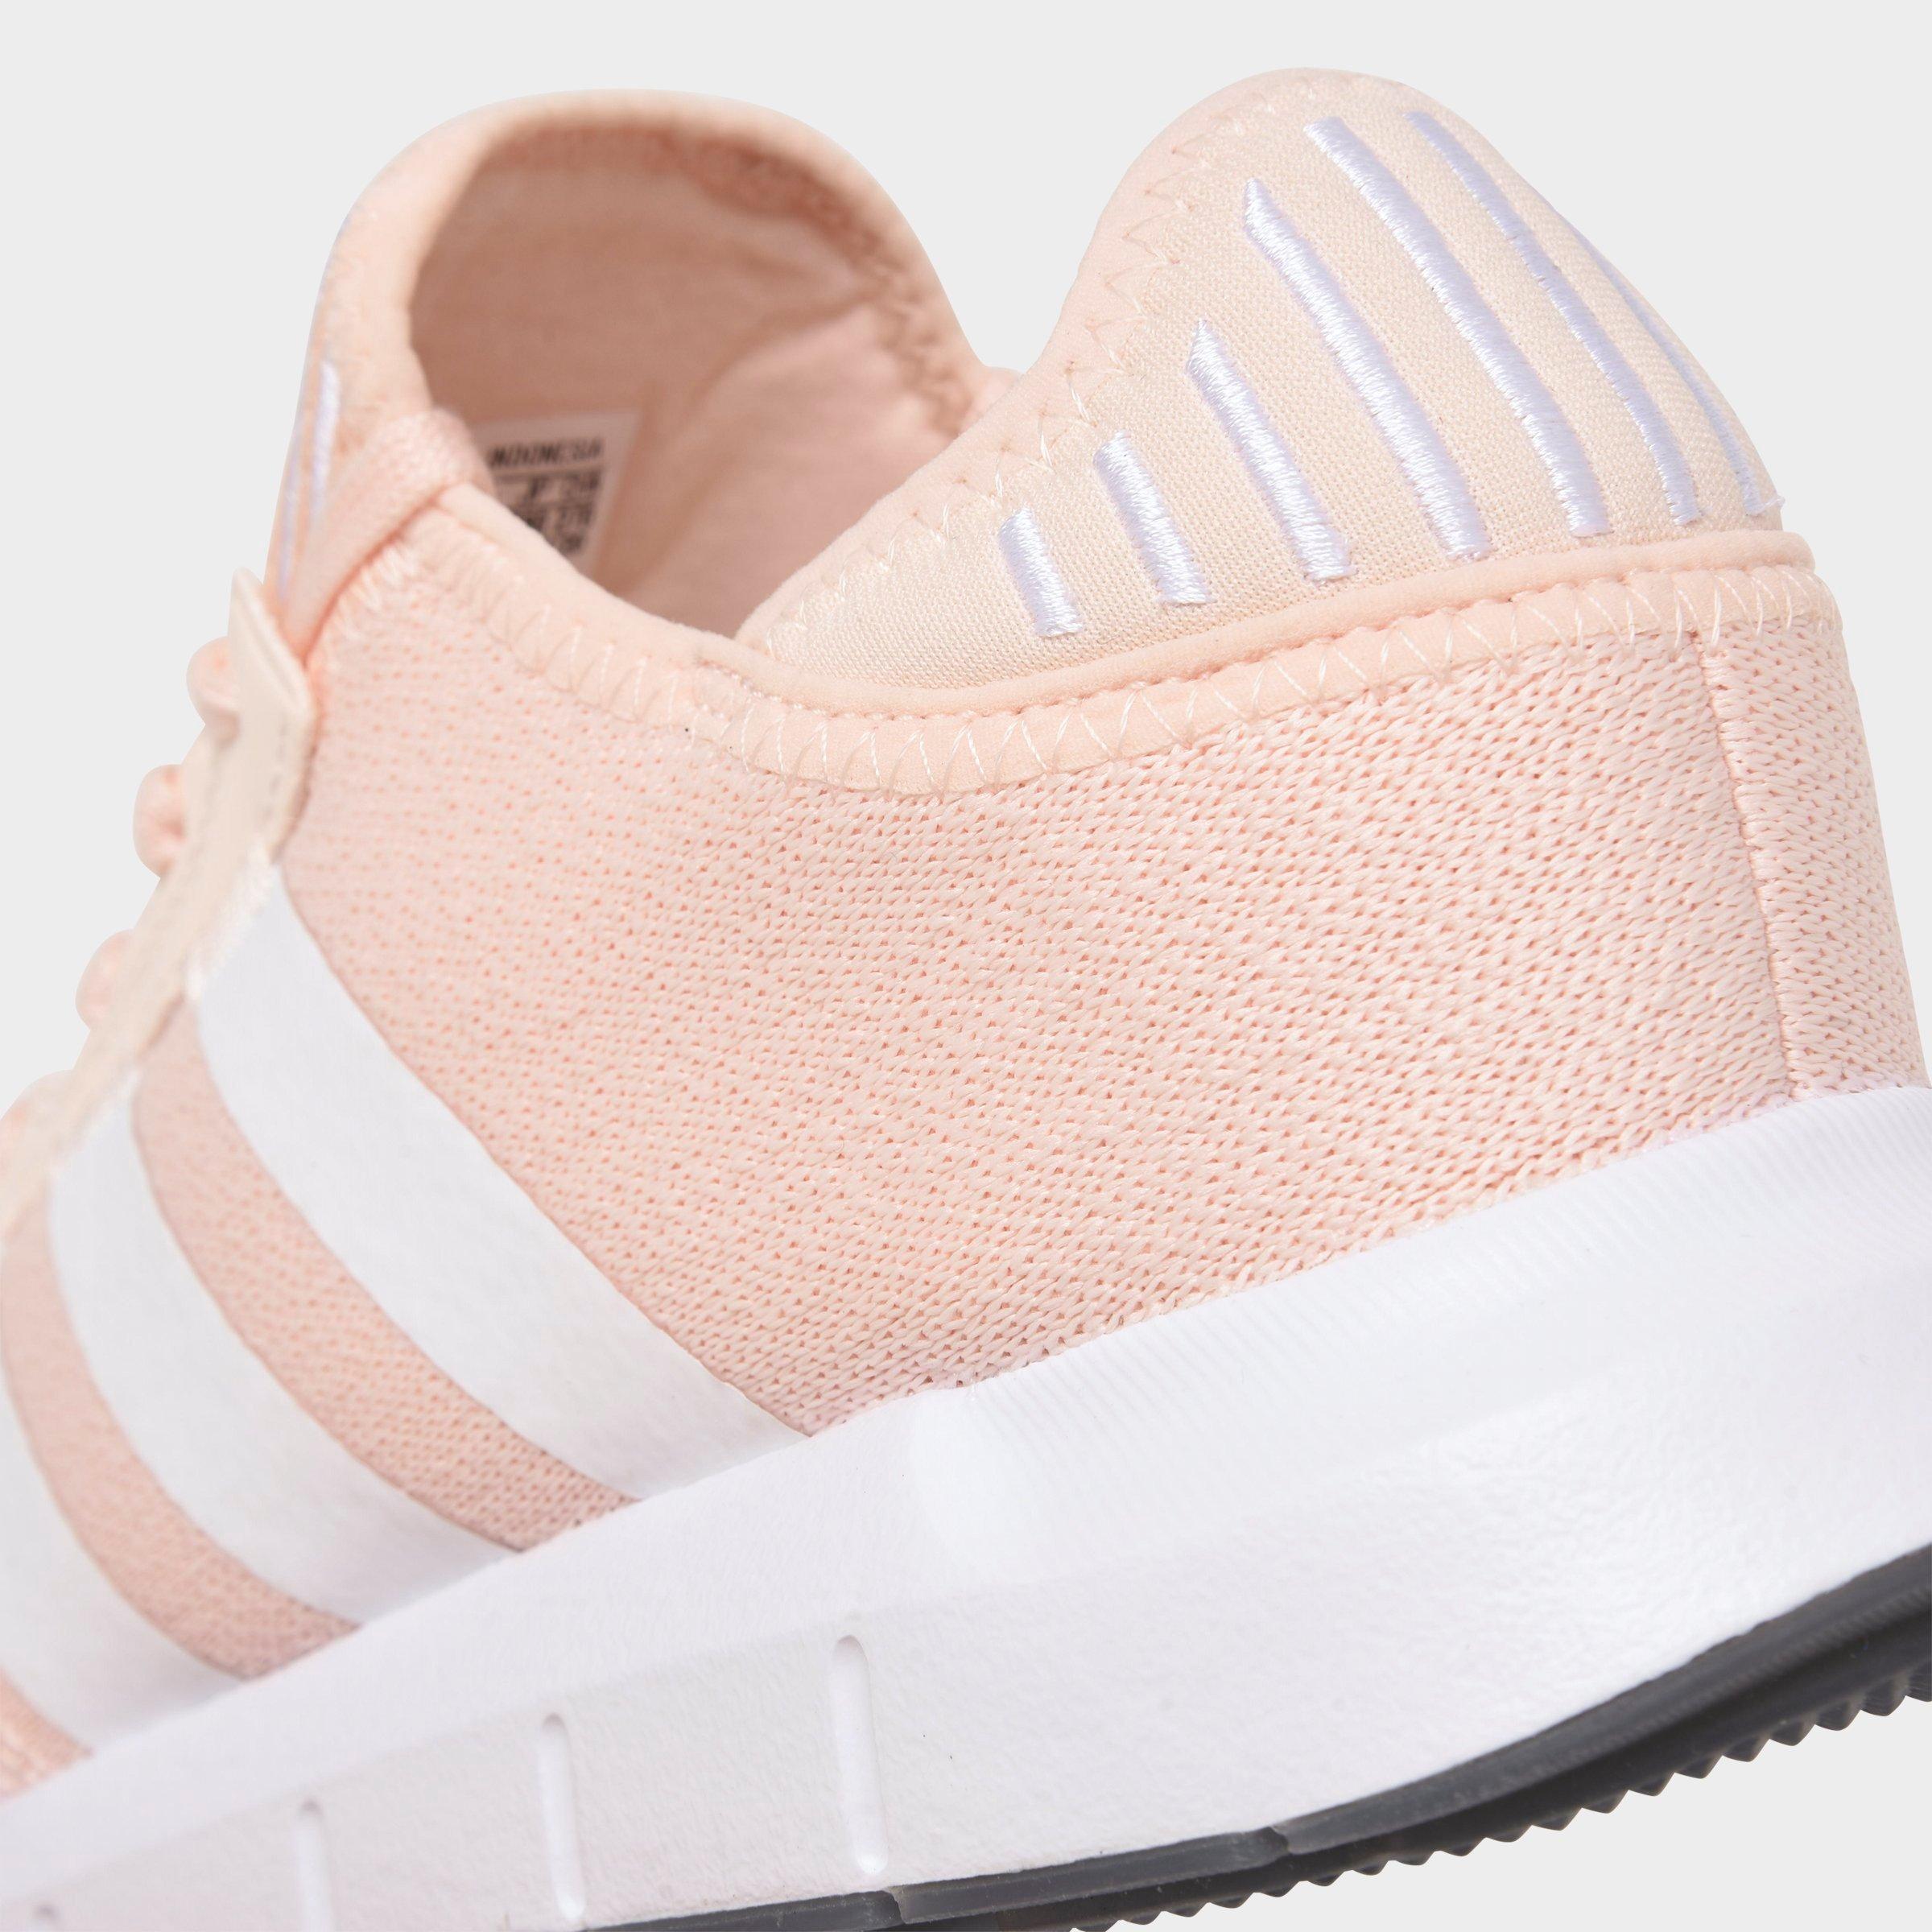 adidas swift run sneaker pink